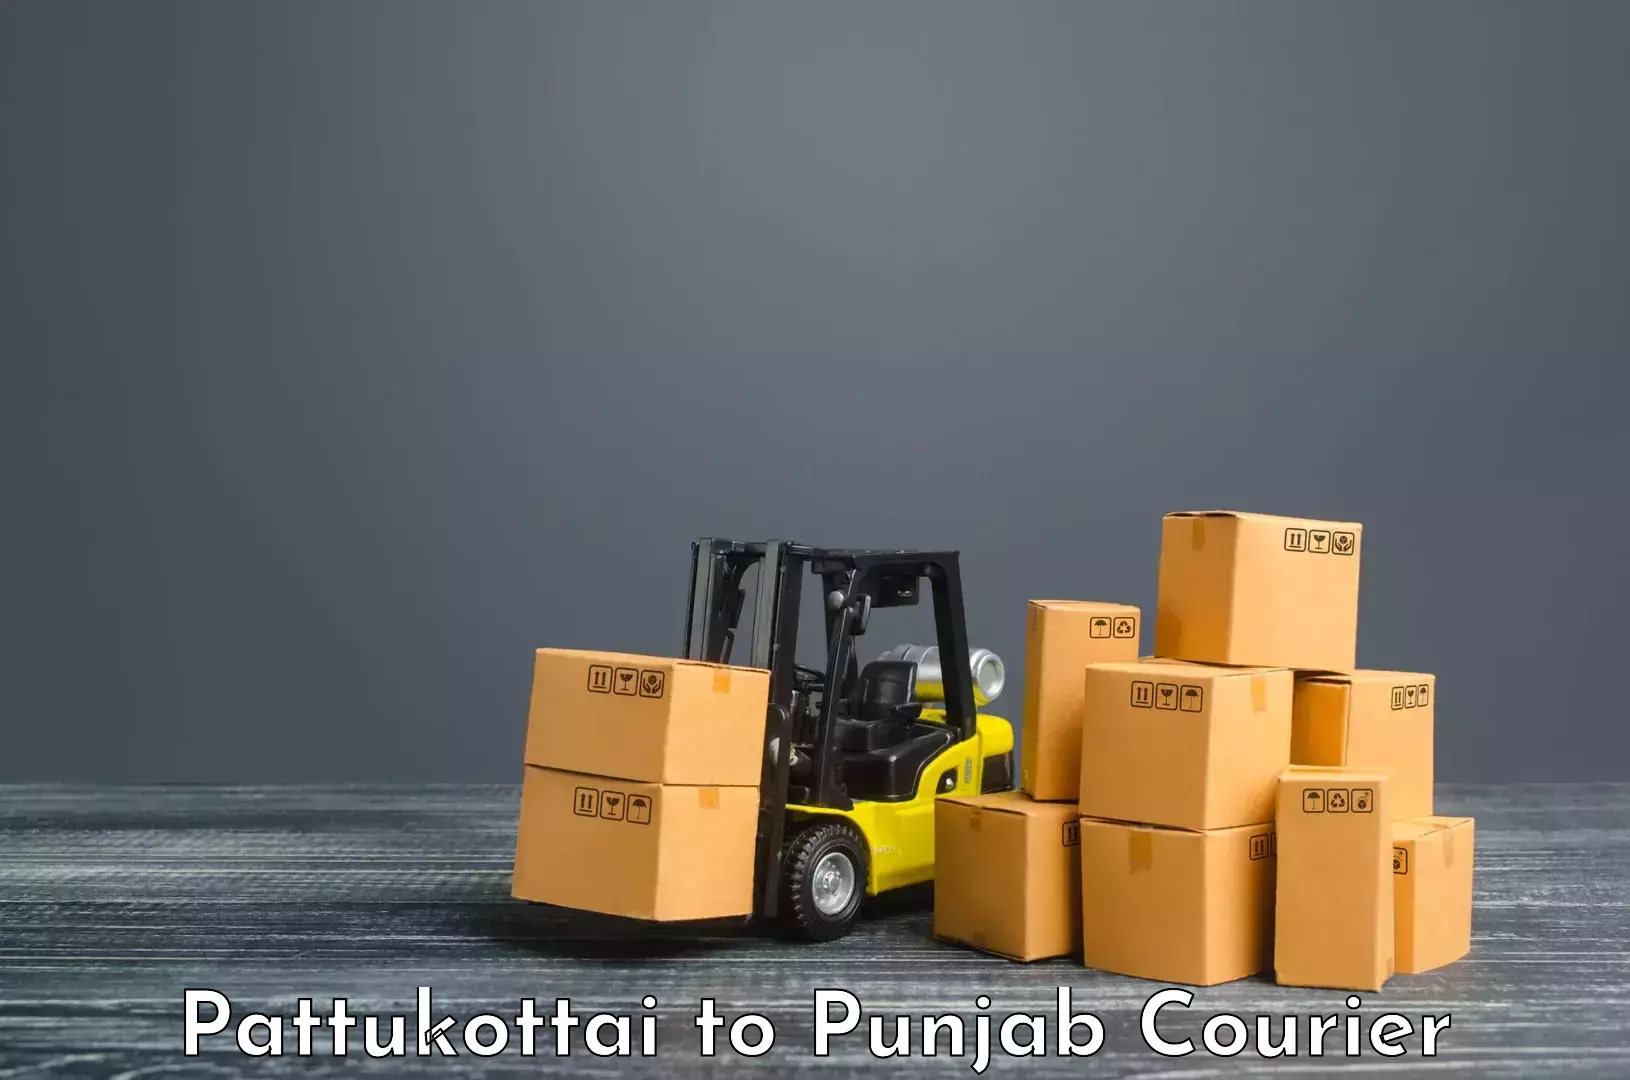 Express delivery solutions Pattukottai to Ludhiana